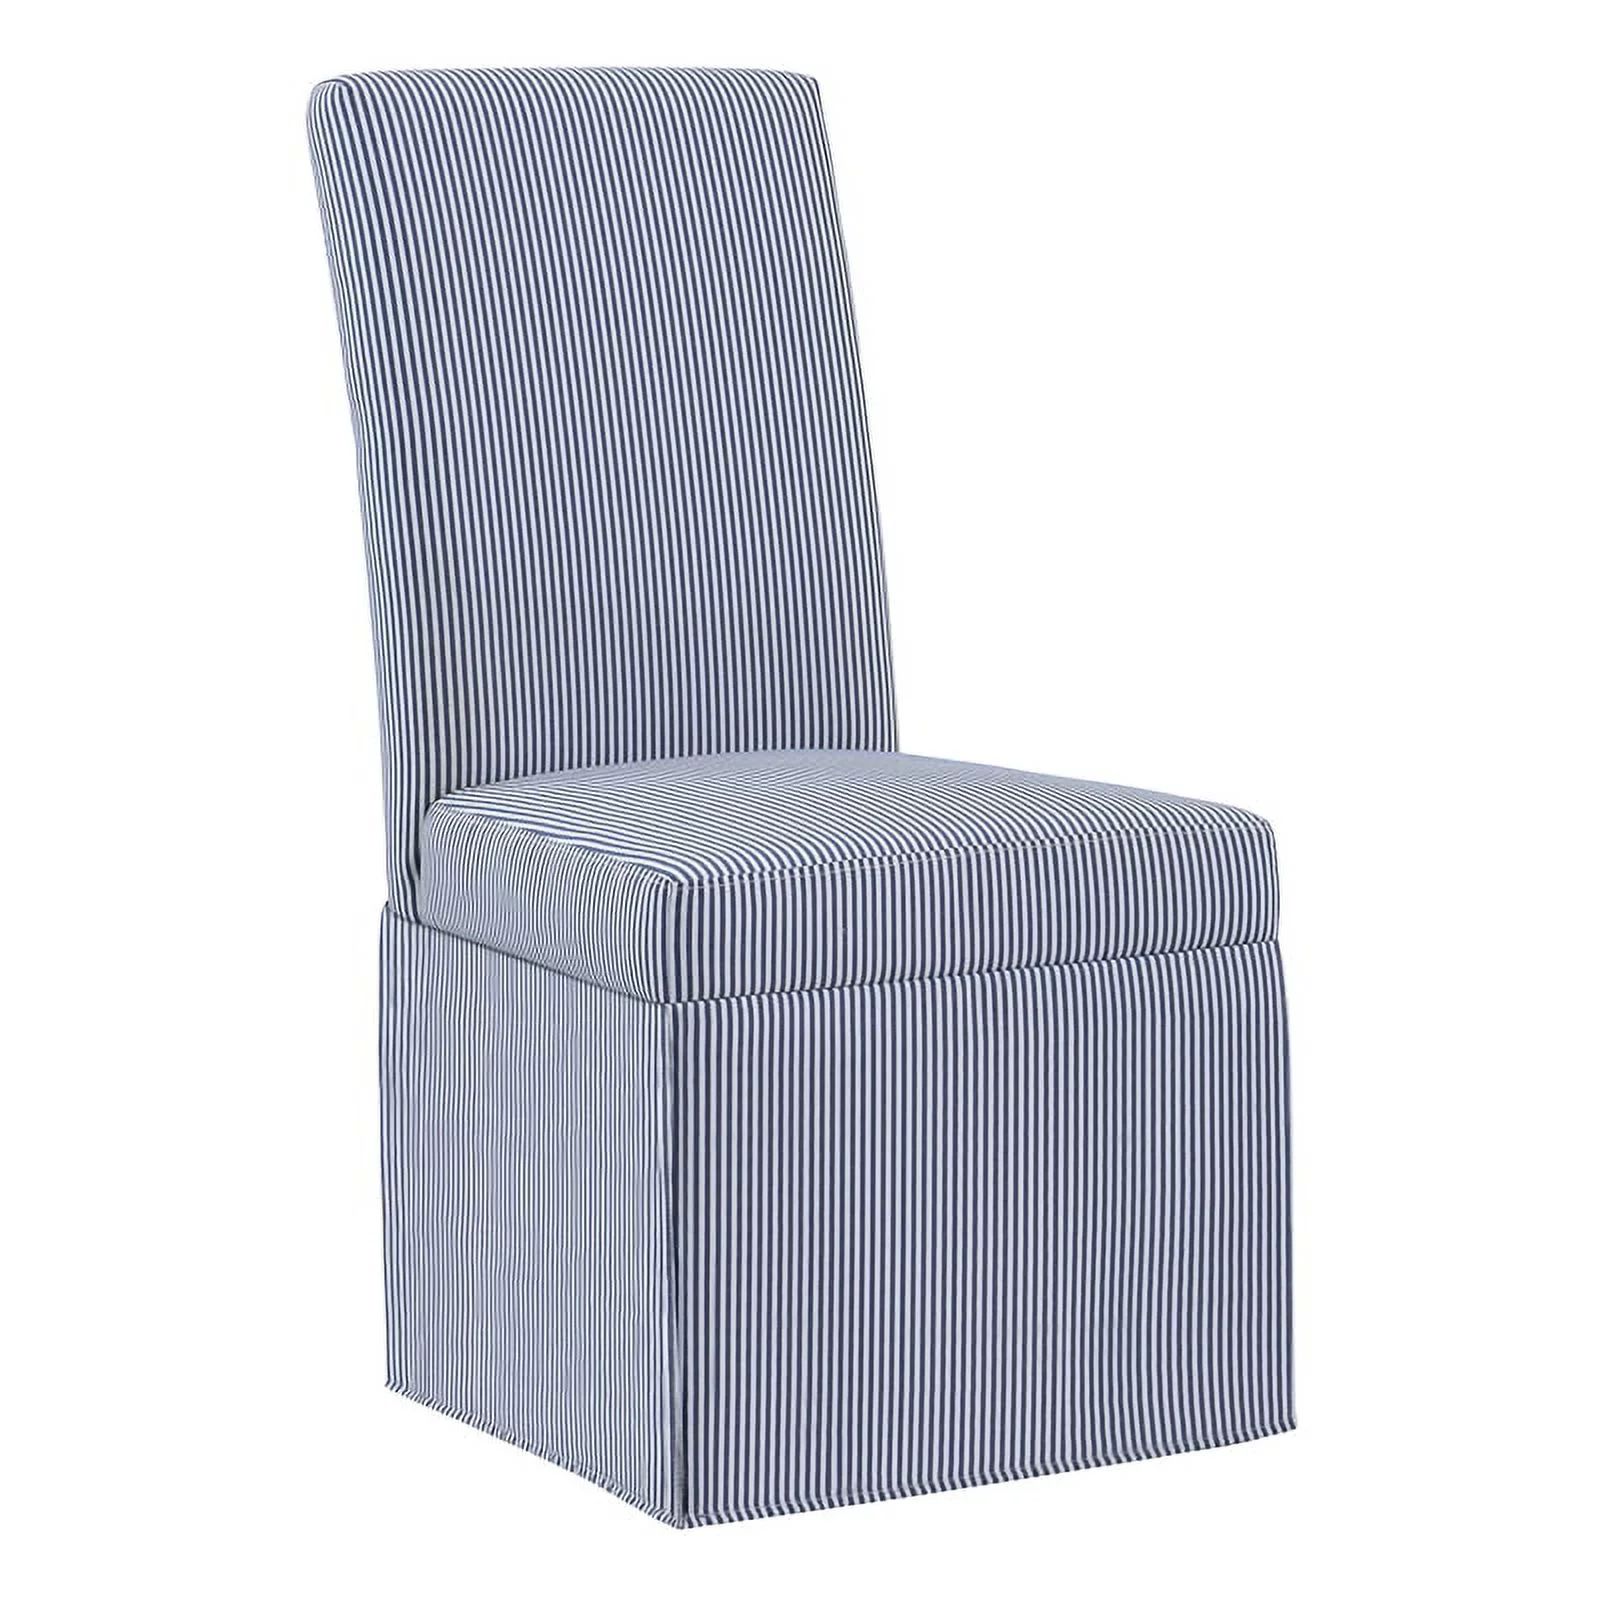 Adalynn Slipcover Dining Chair 2 Pack in Navy Stripe Fabric | Walmart (US)